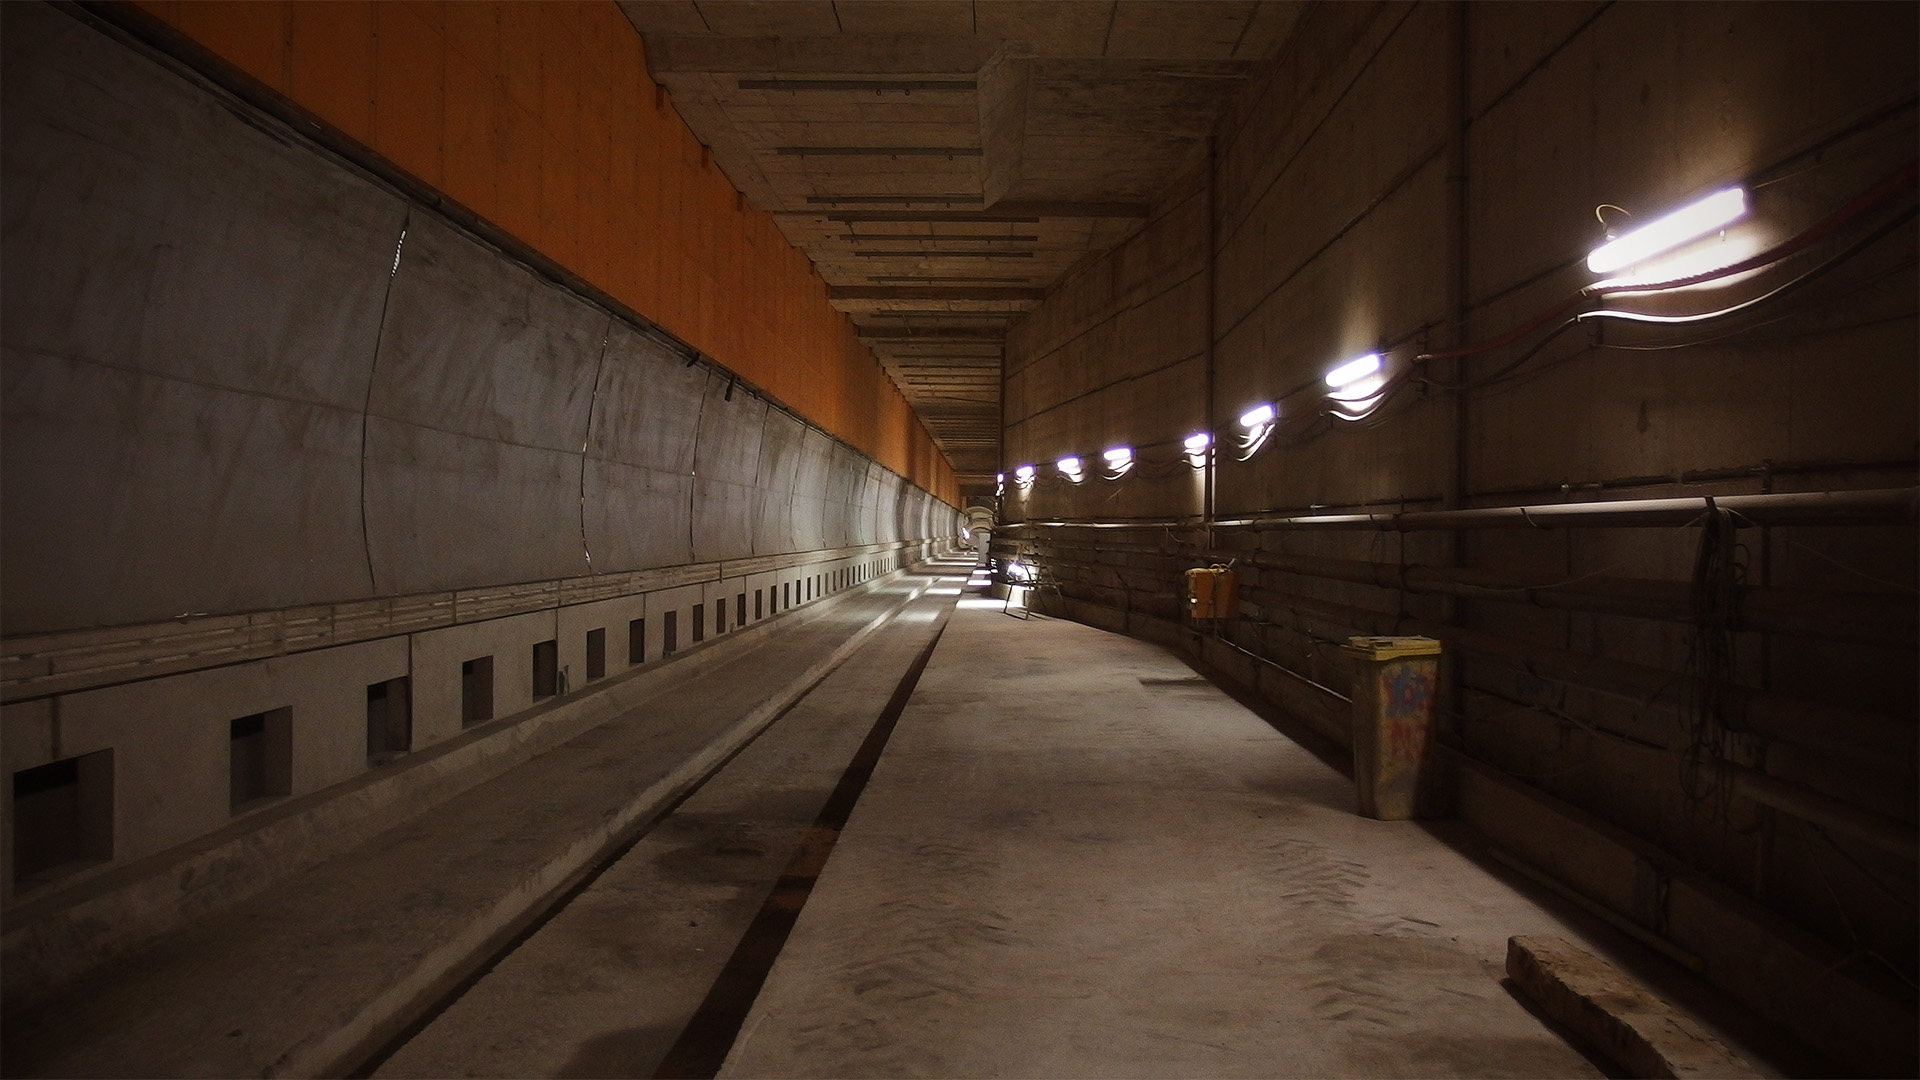 A view along an underground concrete platform